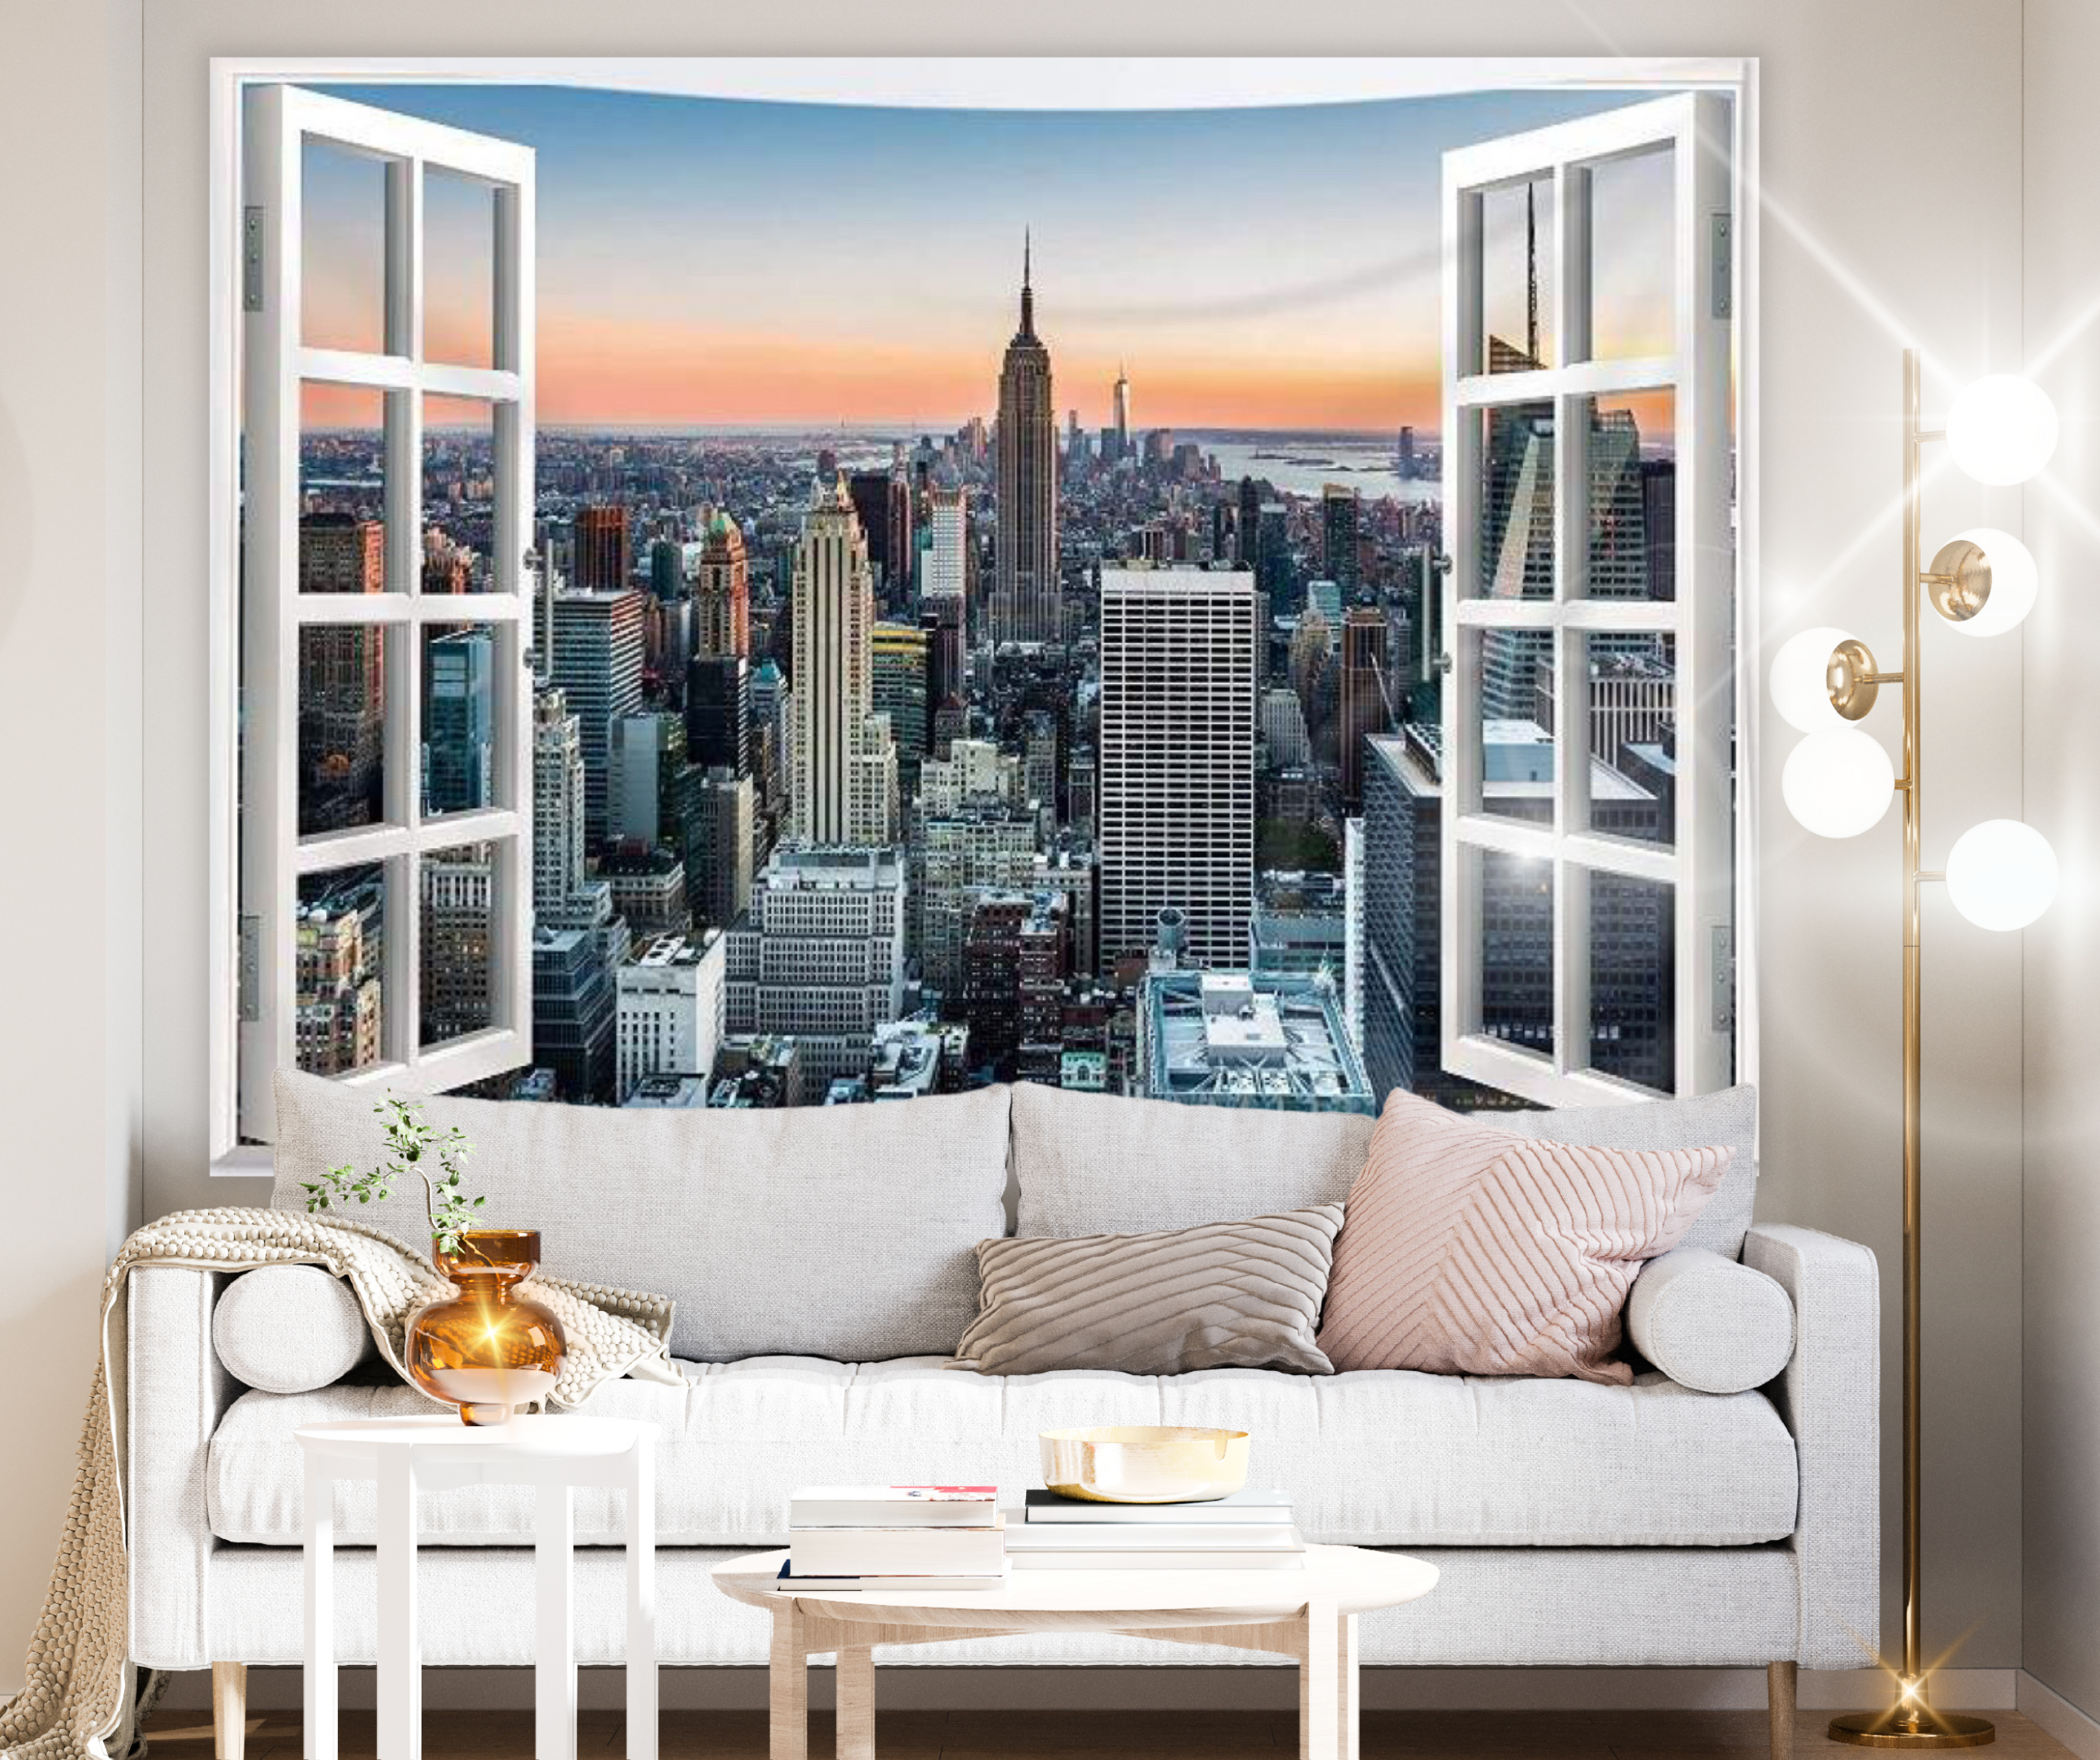 KaiSha Tapestry Wall Hanging; City Skyline Art Home Décor; Cityscape New York Backdrop Tall Buildings Artwork